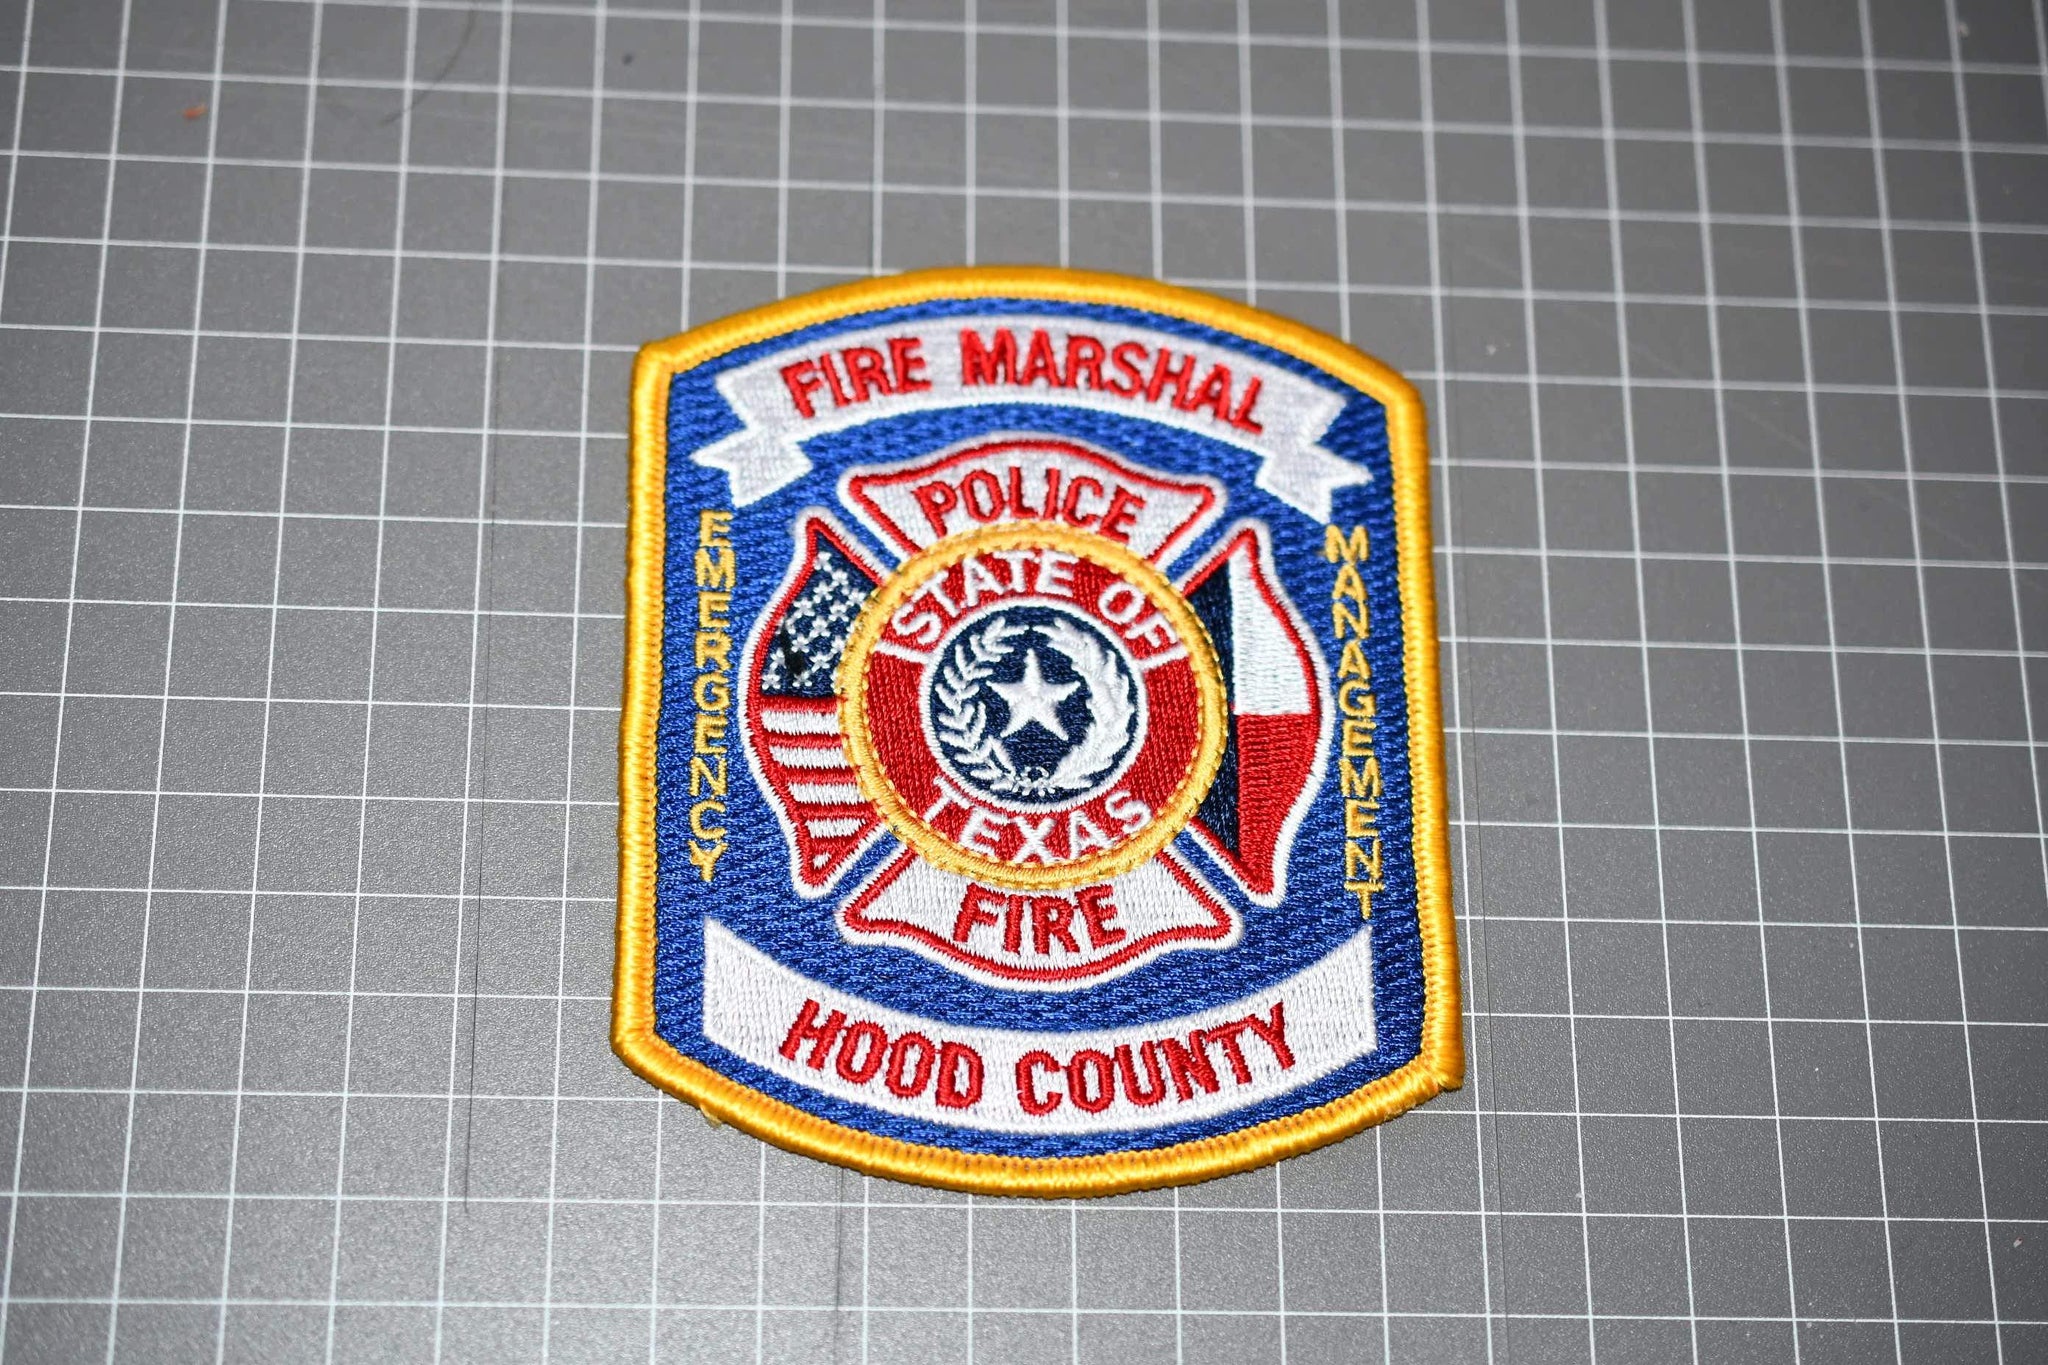 Hood County Texas Police Fire Marshal Patch (B3)